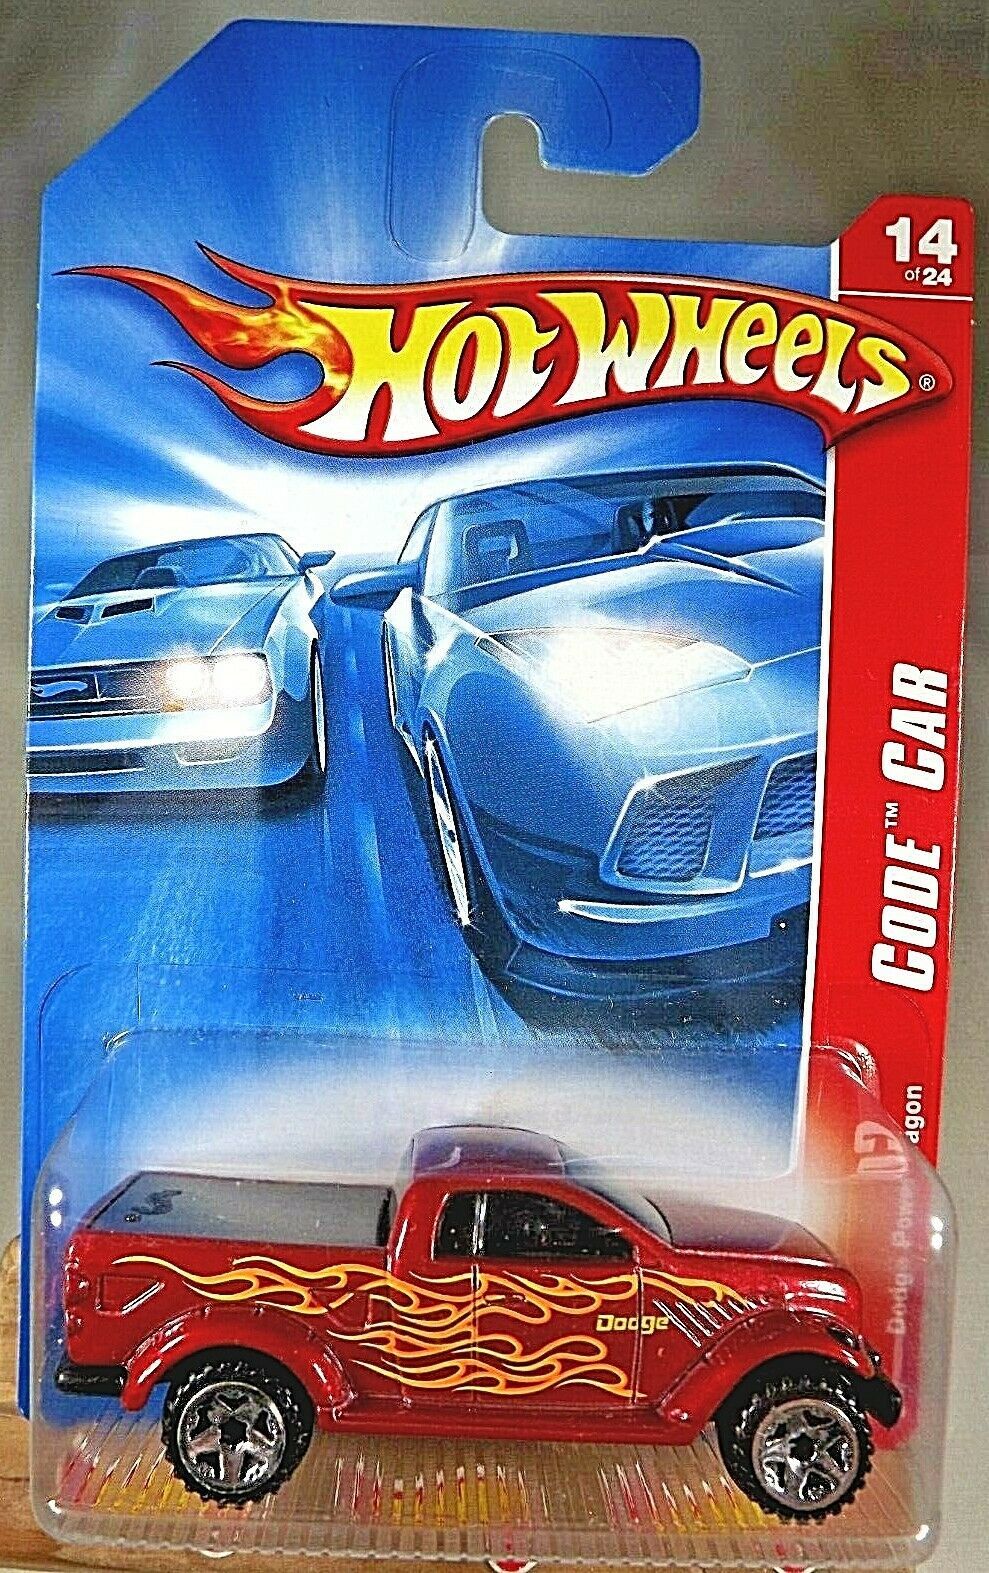 2007 Hot Wheels #98 Code Car 14/24 DODGE POWER WAGON Red Variant wChrome ORUT5sp